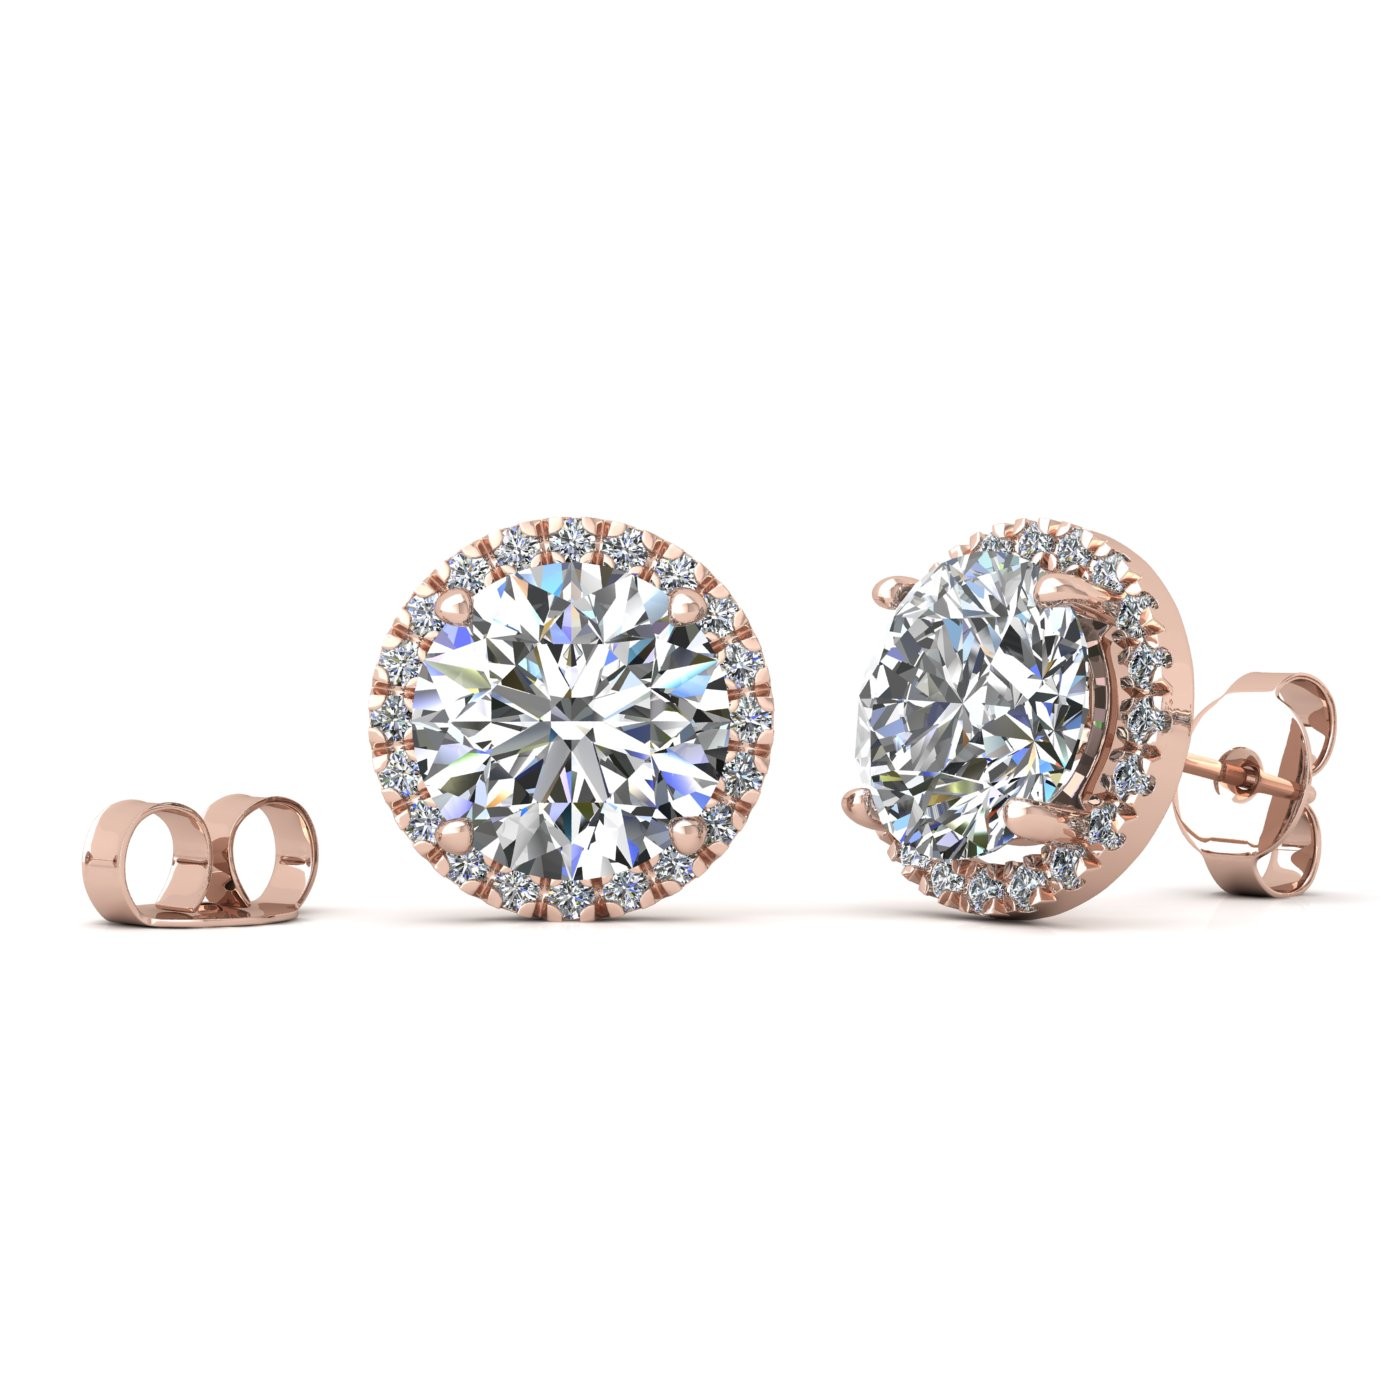 18k rose gold  0,5 ct each (1,0 tcw) 4 prongs round shape diamond earrings with diamond pavÉ set halo Photos & images